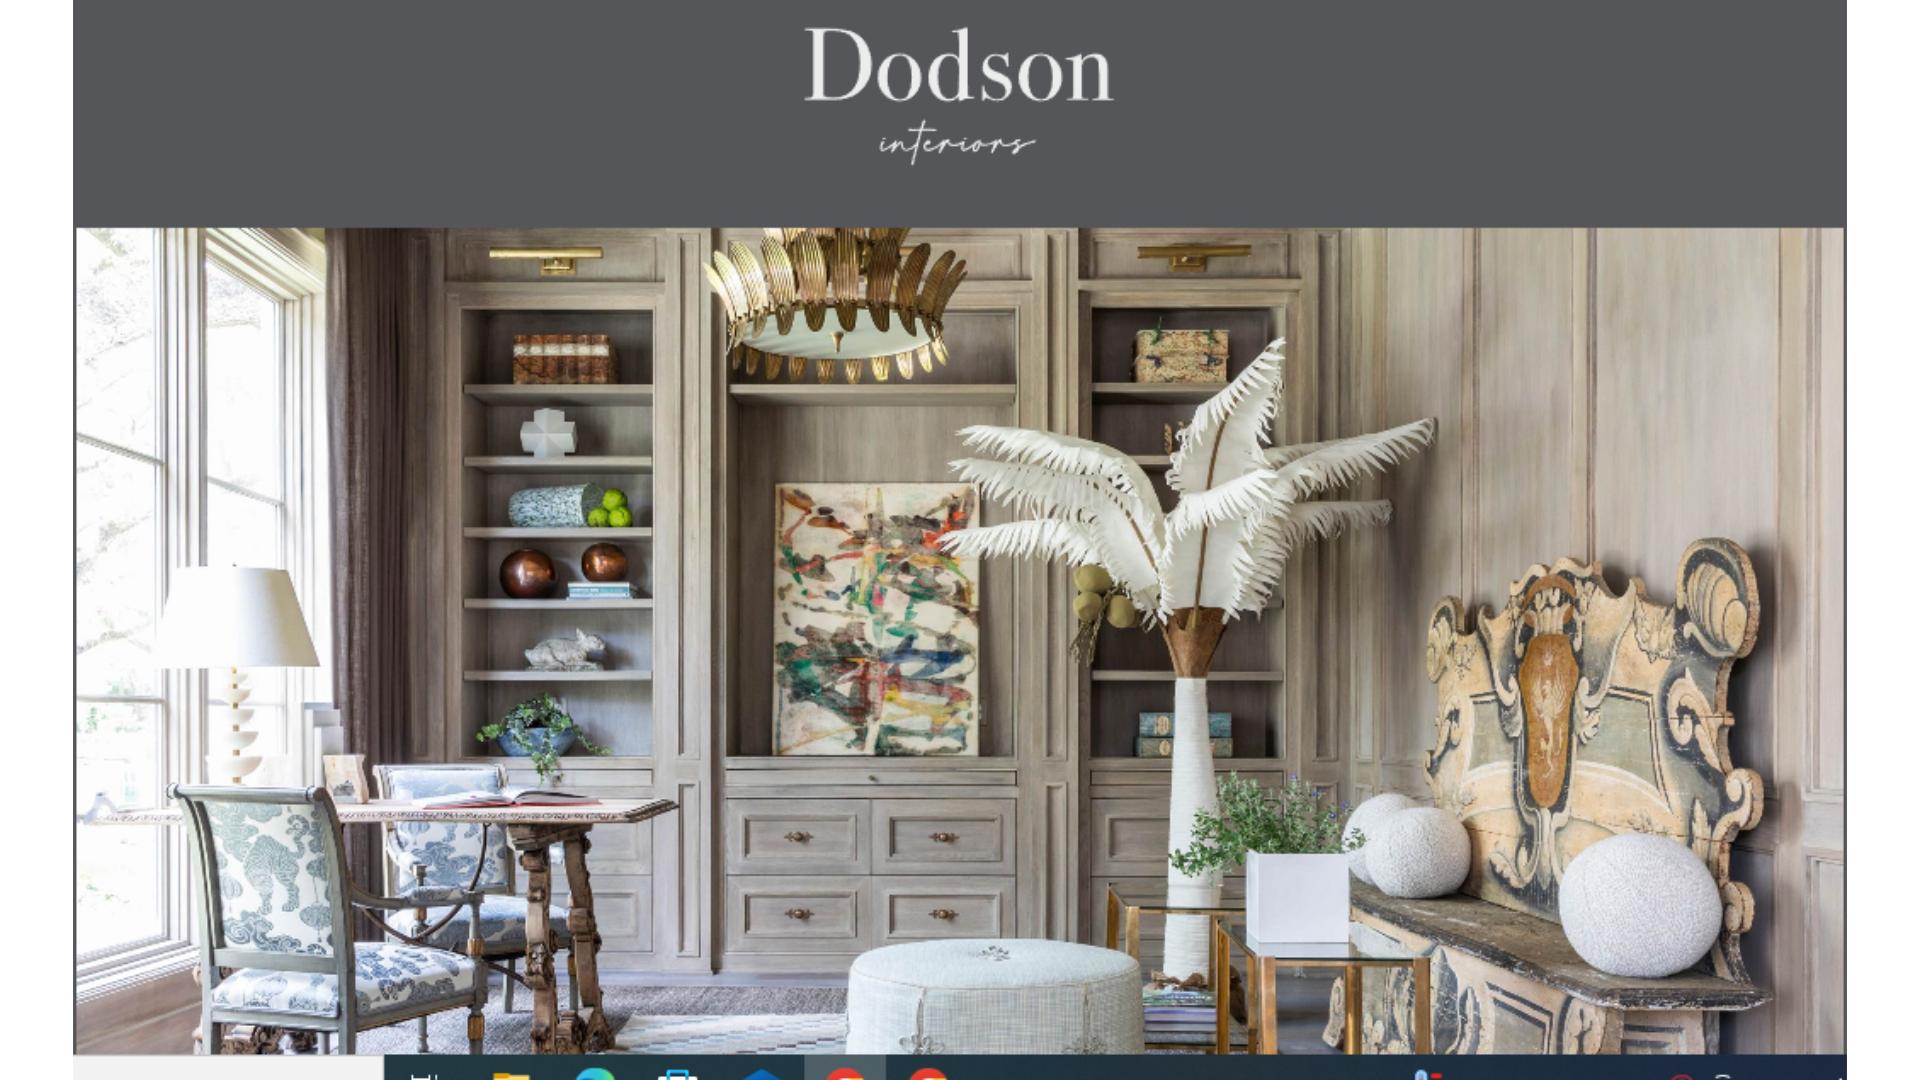 Dodson Interiors